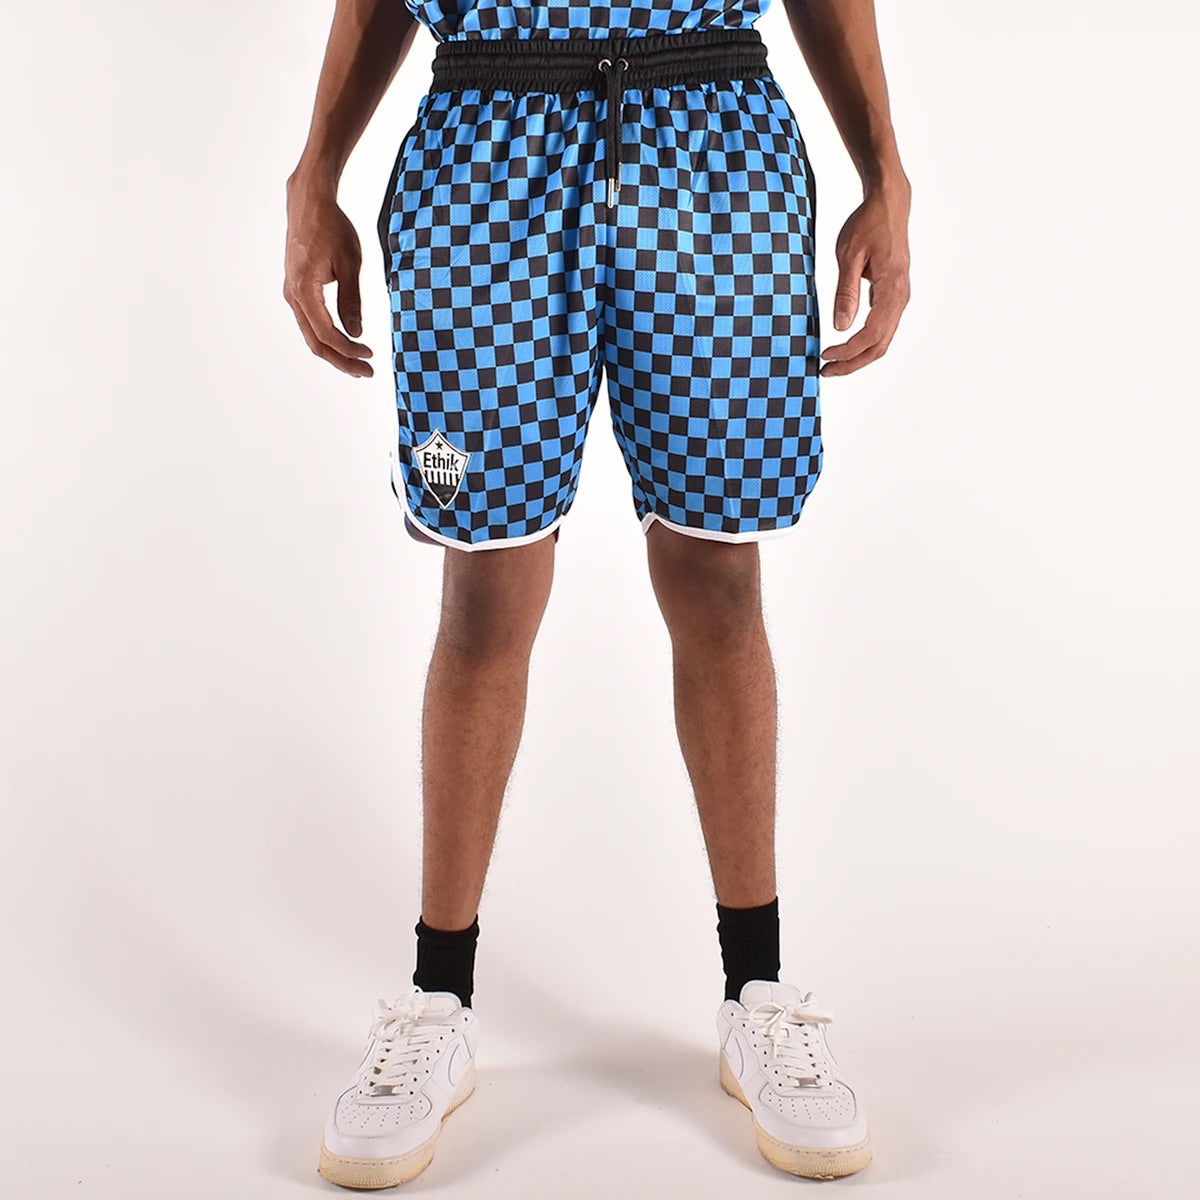 Ethik Astoria Basketball Shorts (blue)